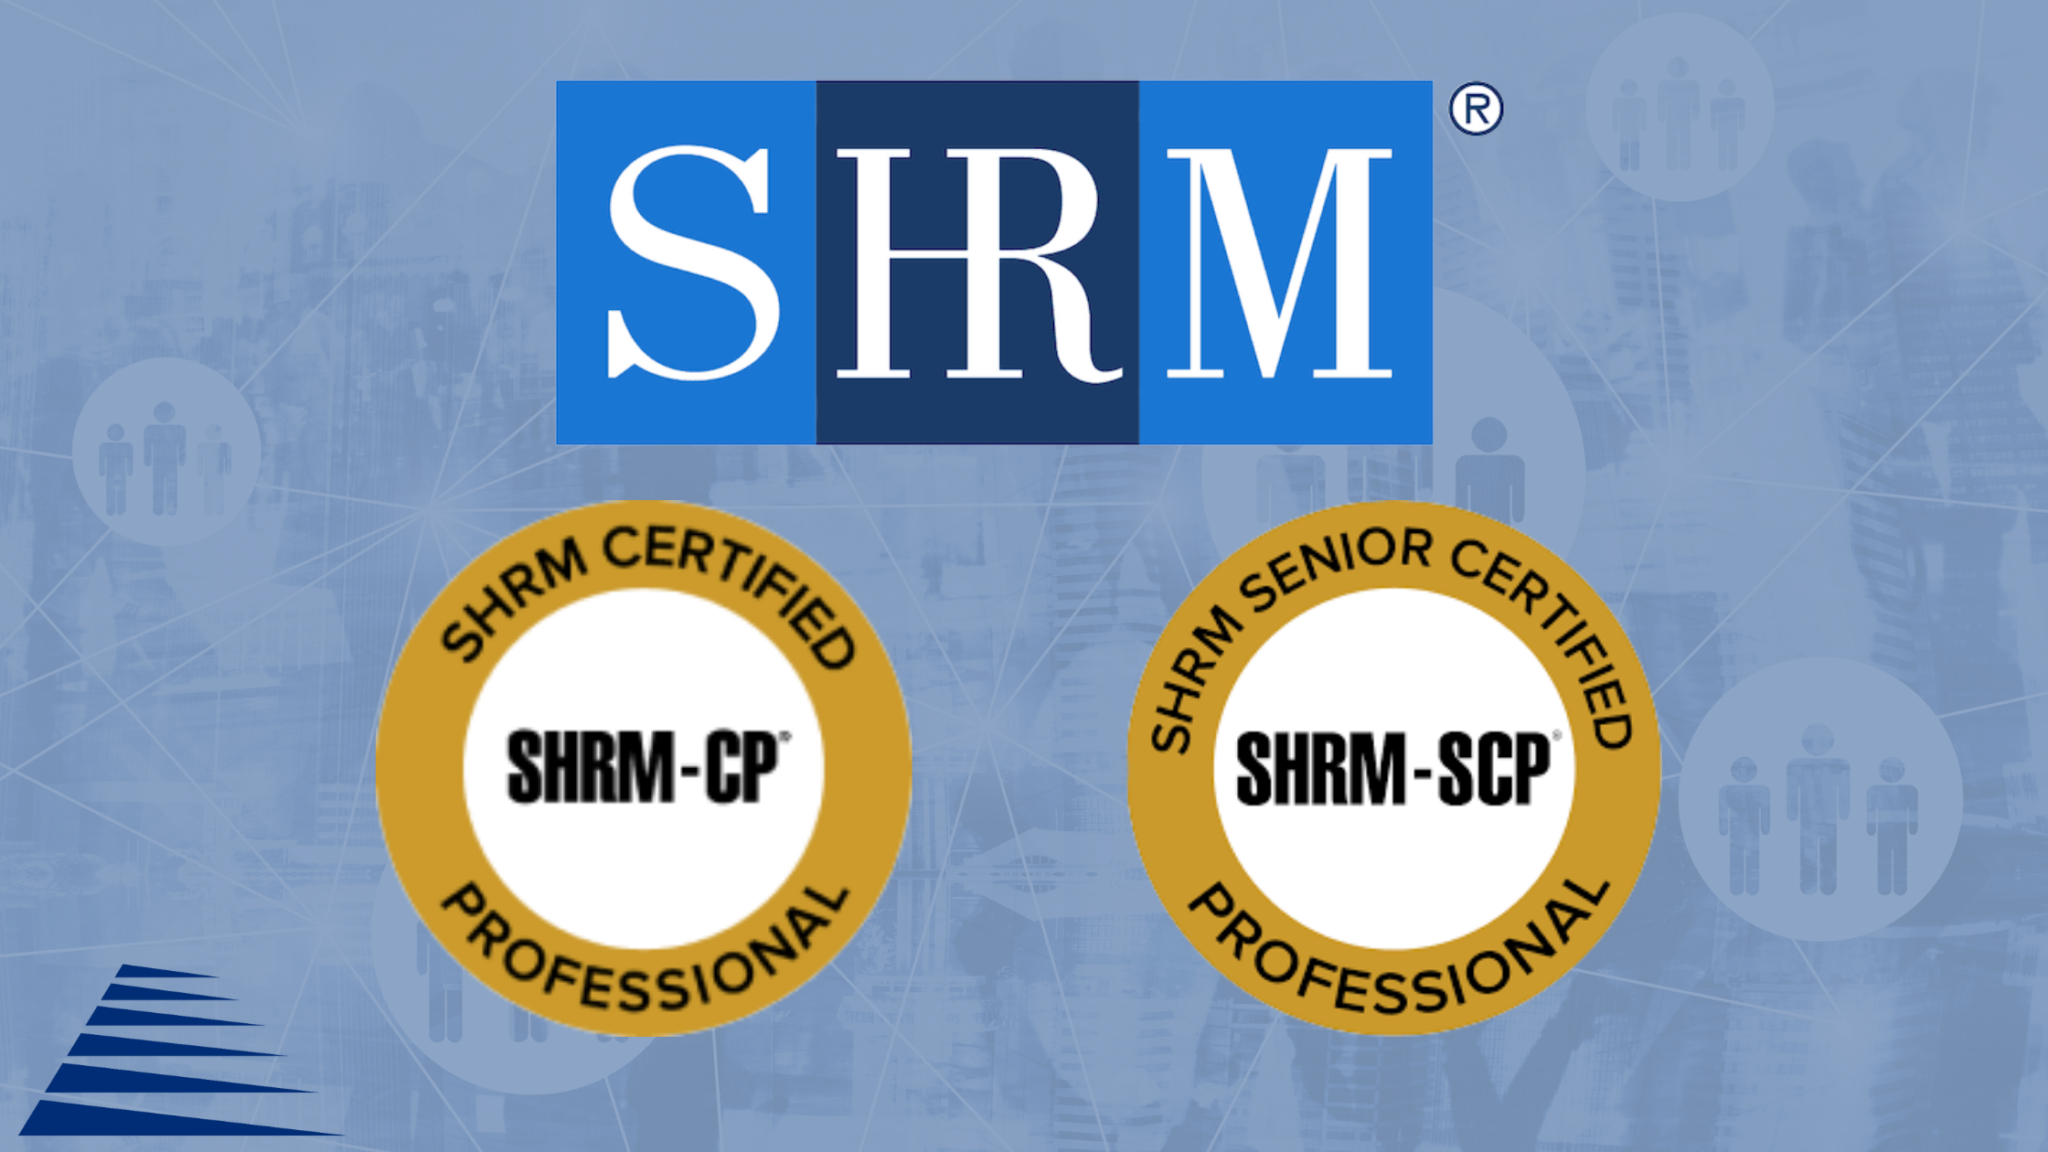 SHRM HR Certifications